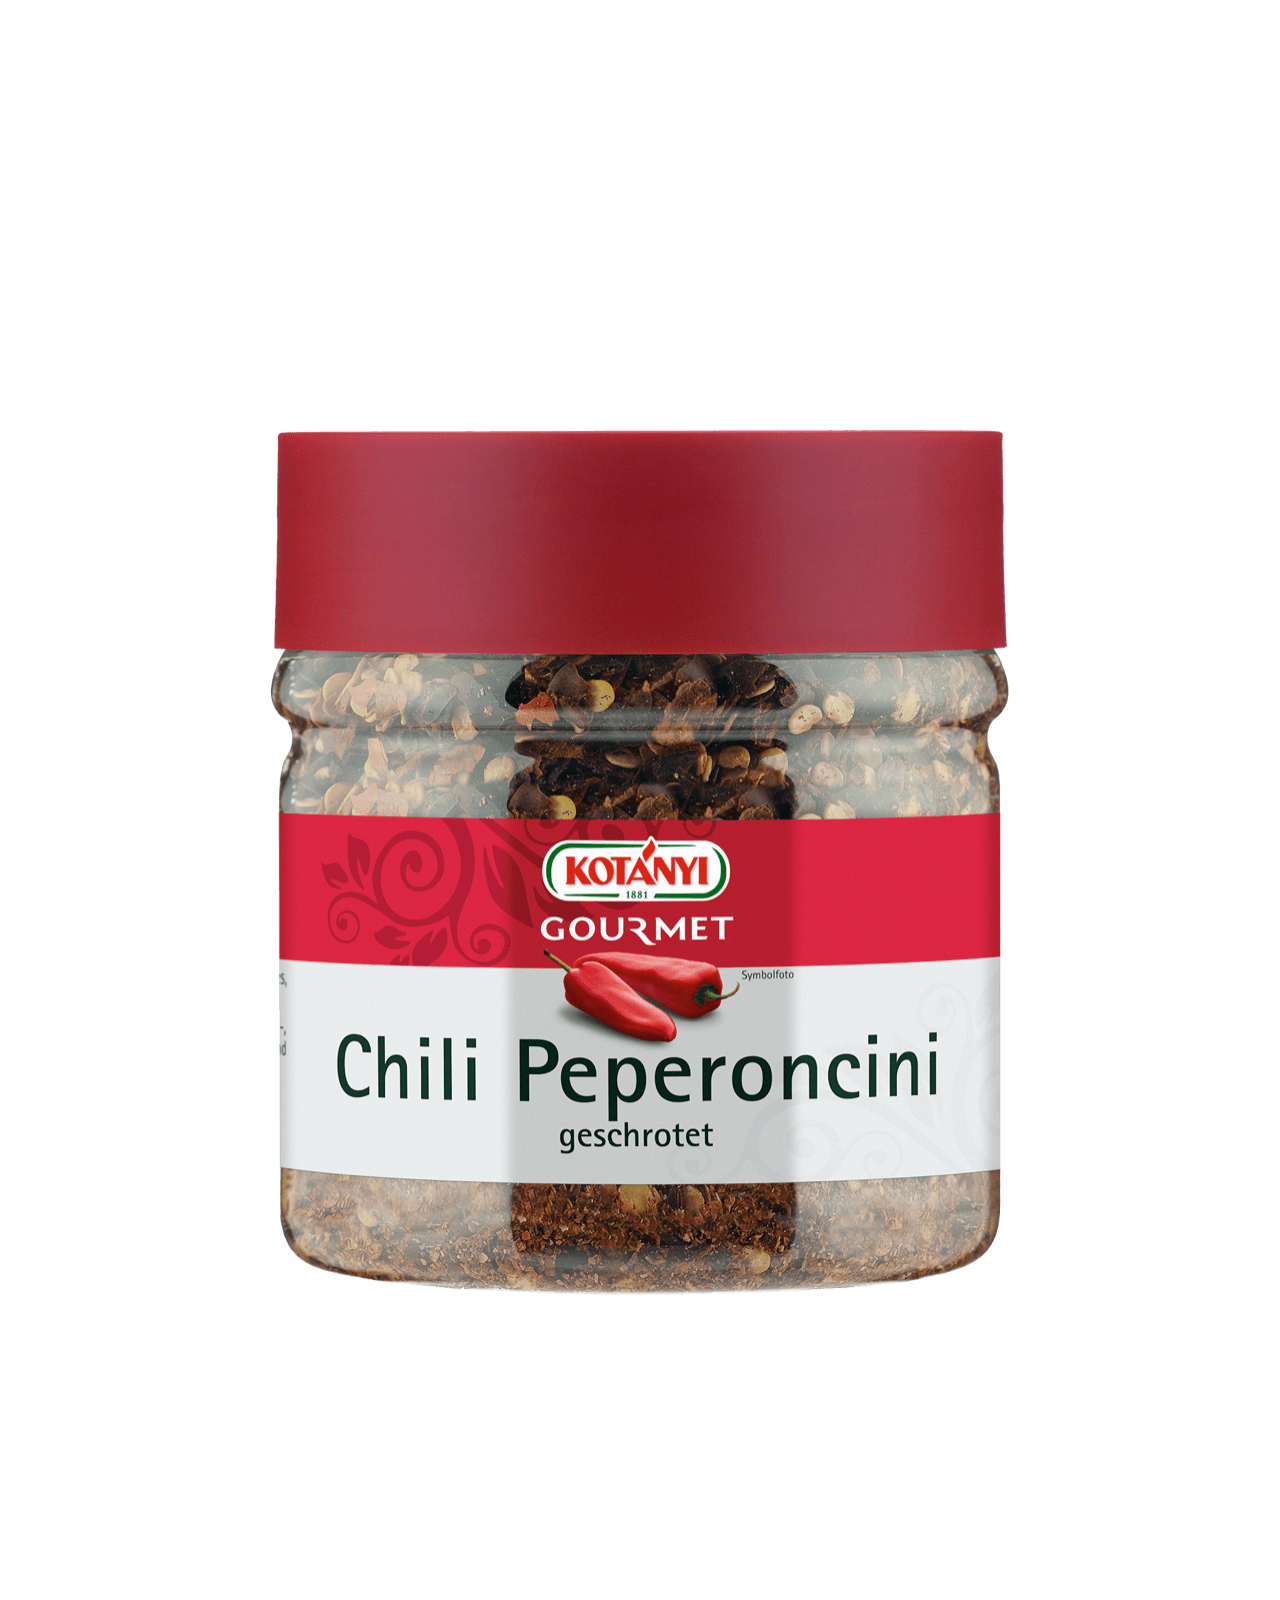 Kotányi Gourmet Chili Peperoncini in der 400ccm Dose